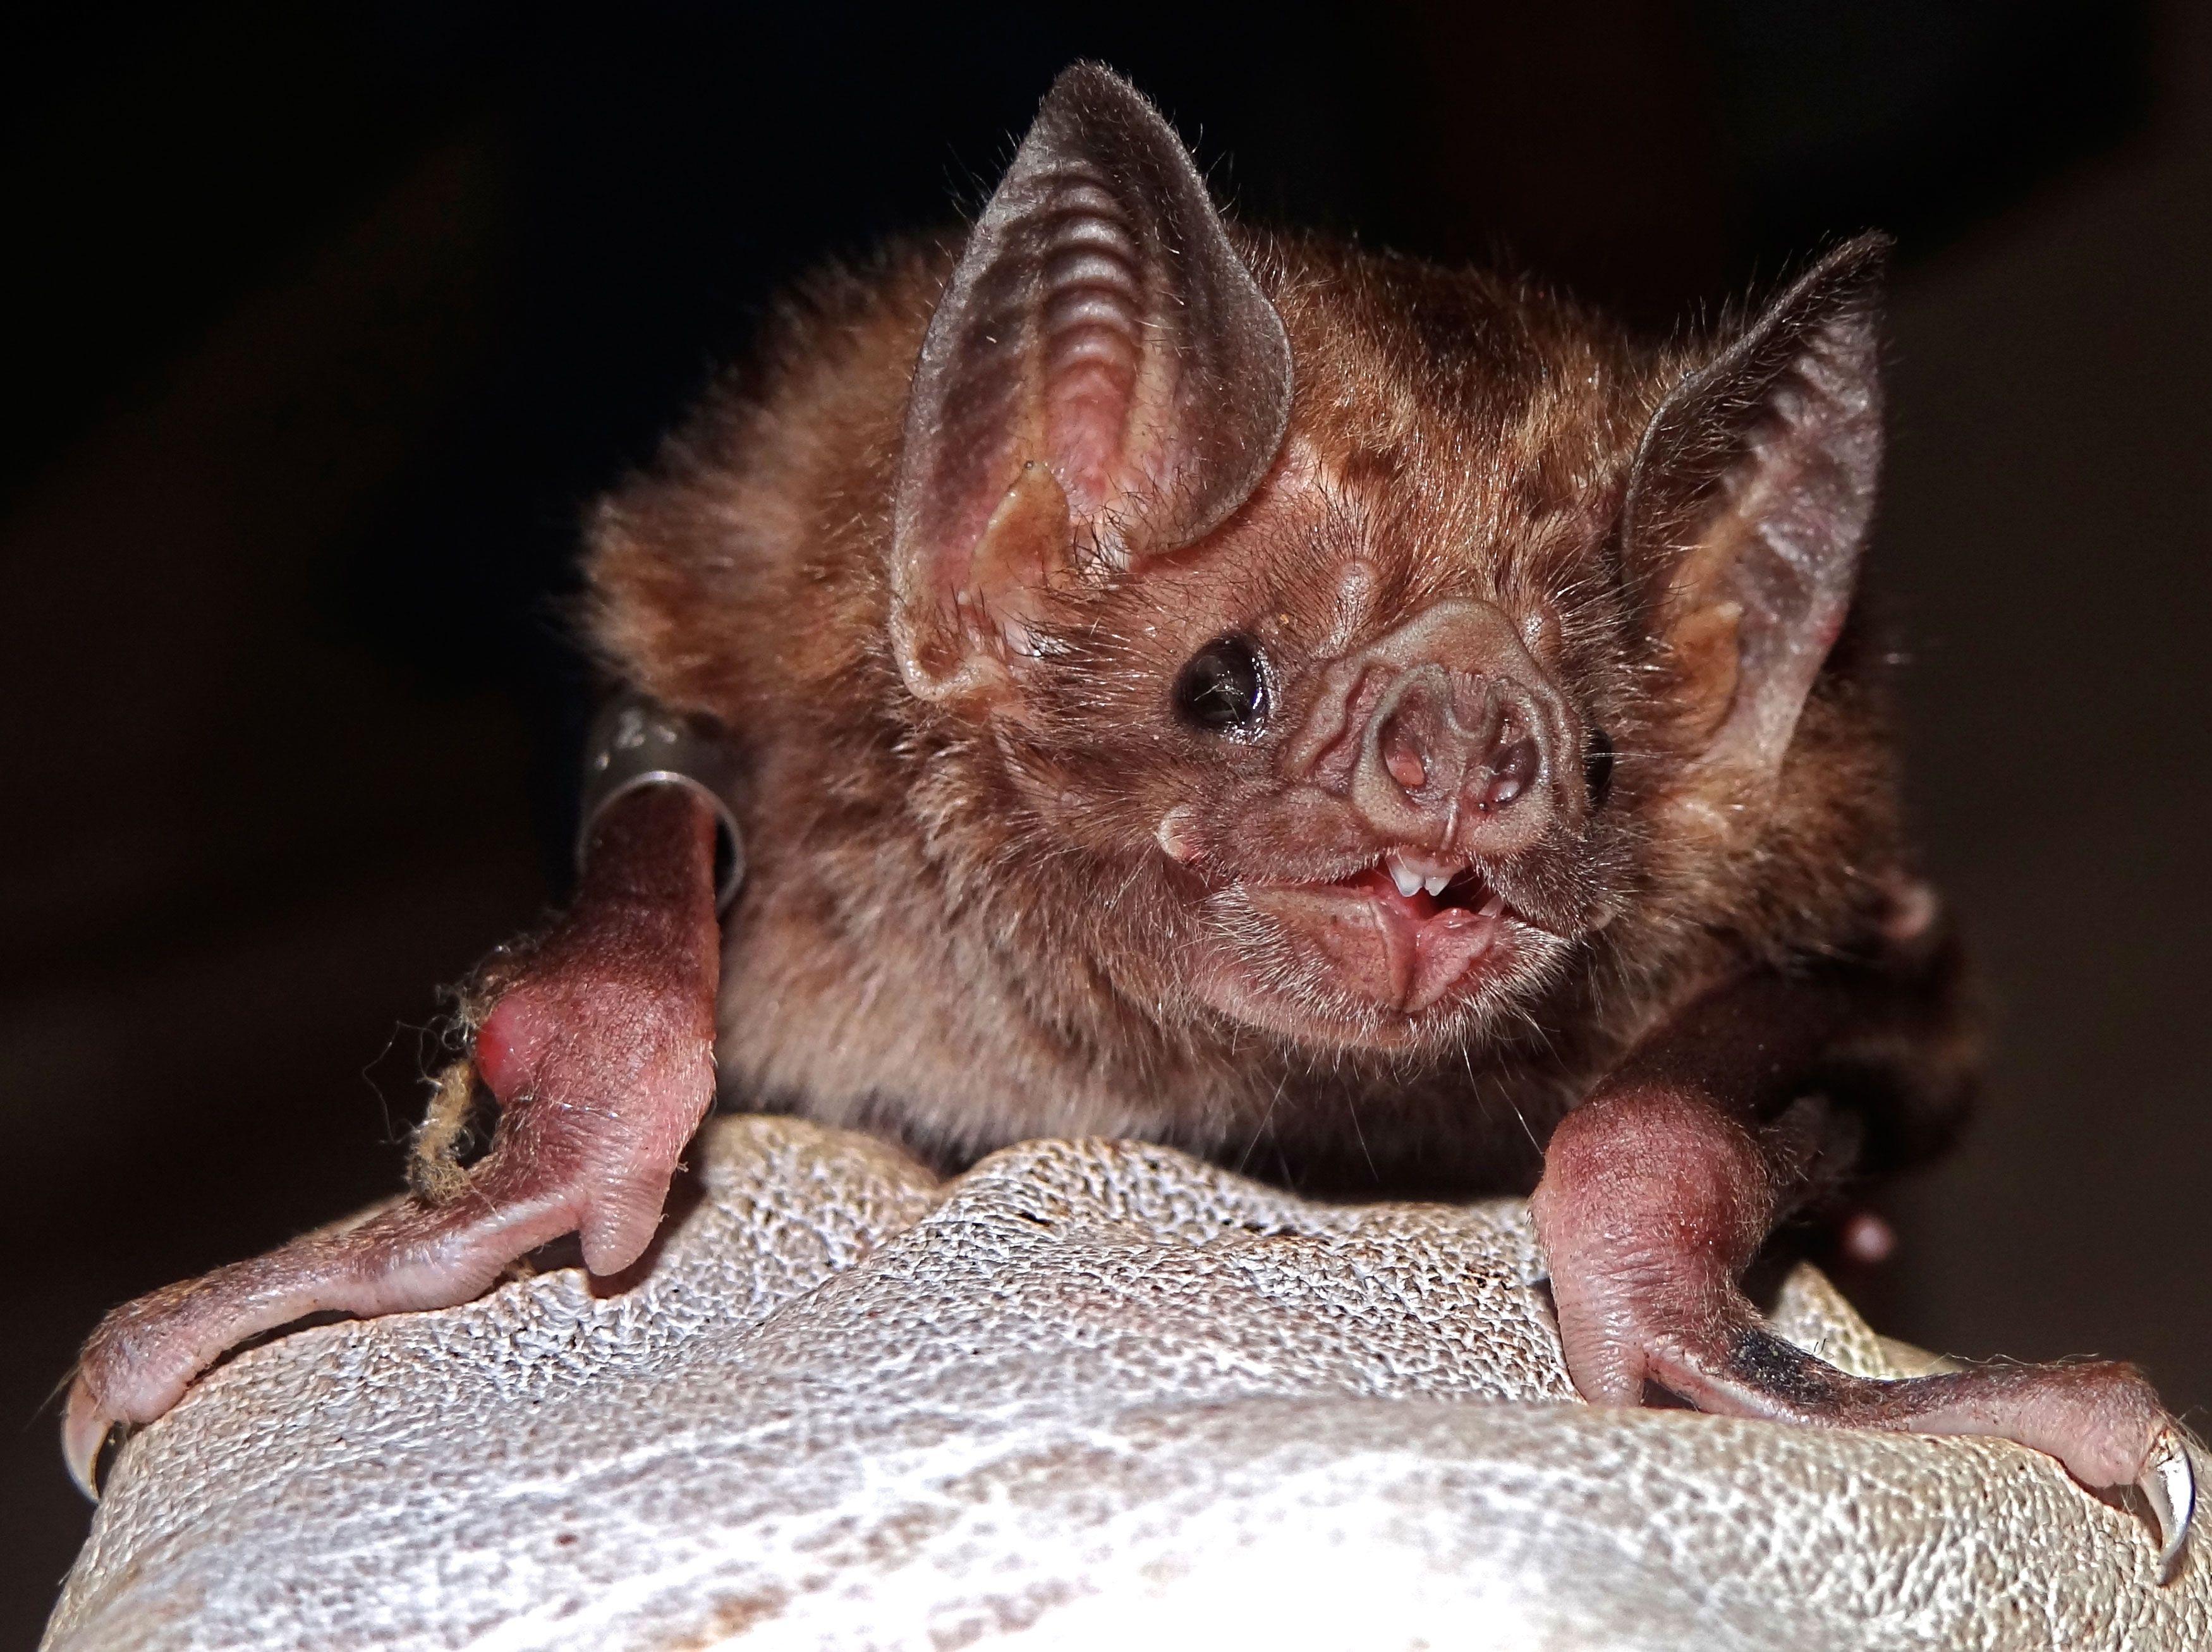 Vampire Bat Face Logo - Culling vampire bats to stem rabies in Latin America can backfire